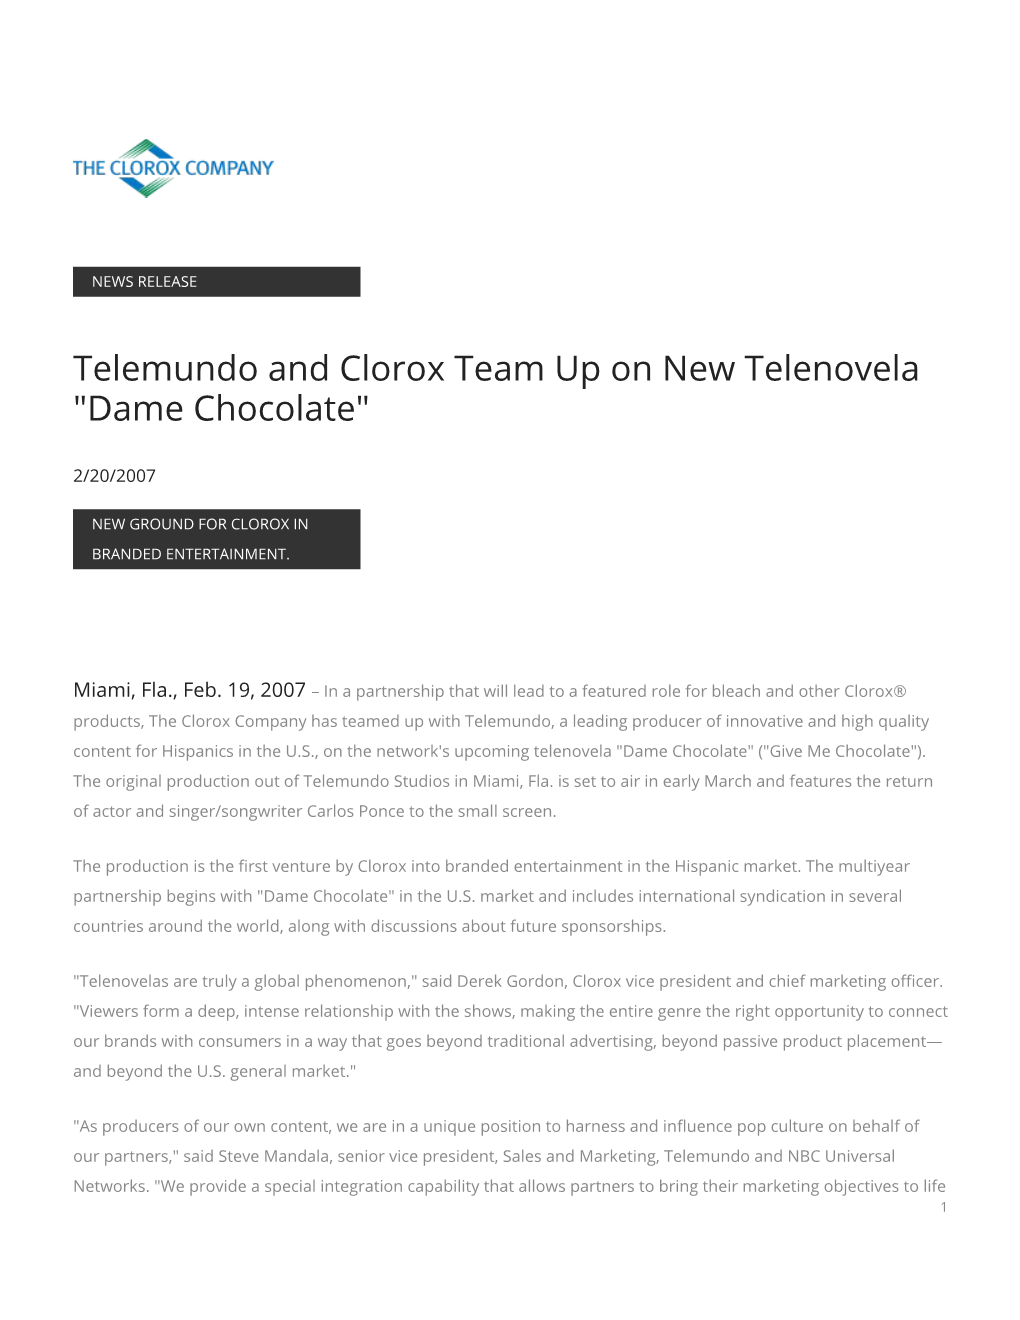 Telemundo and Clorox Team up on New Telenovela "Dame Chocolate"